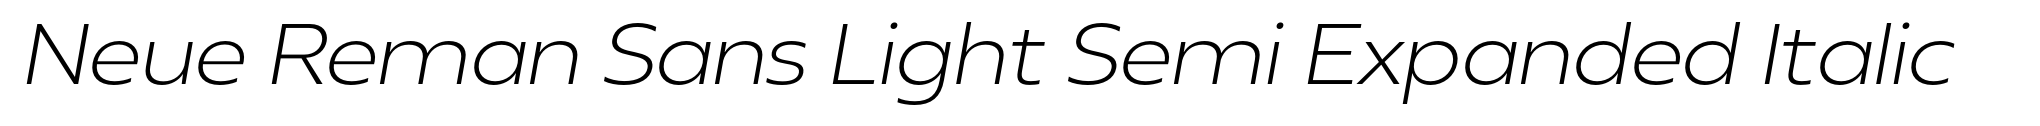 Neue Reman Sans Light Semi Expanded Italic image